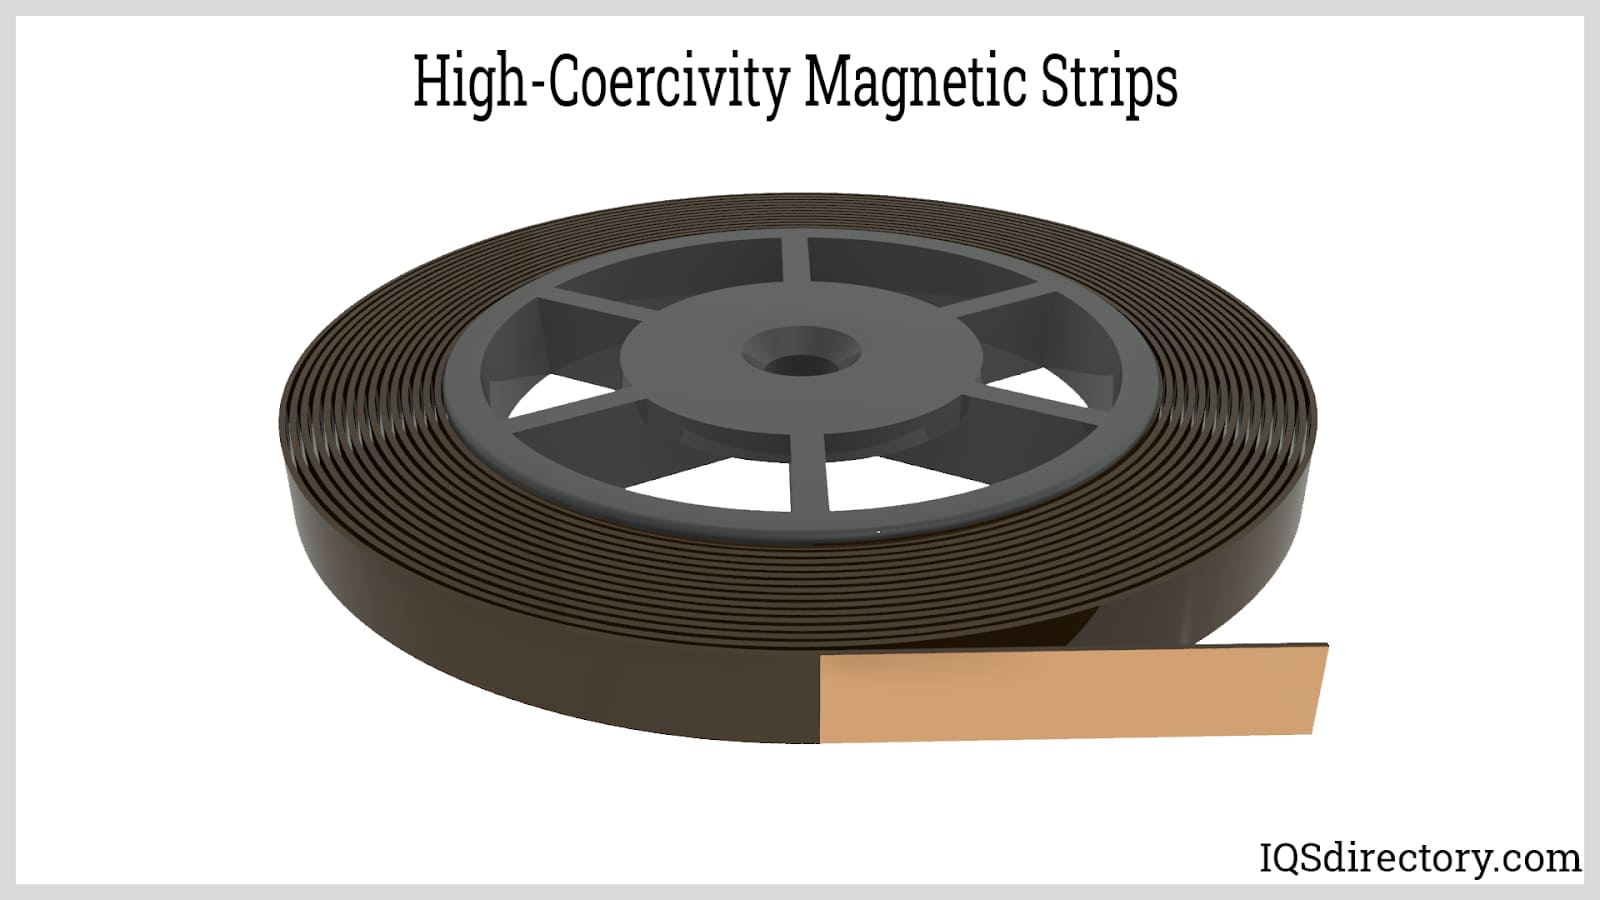 How Do Flexible Magnets Work - Magnum Magnetics